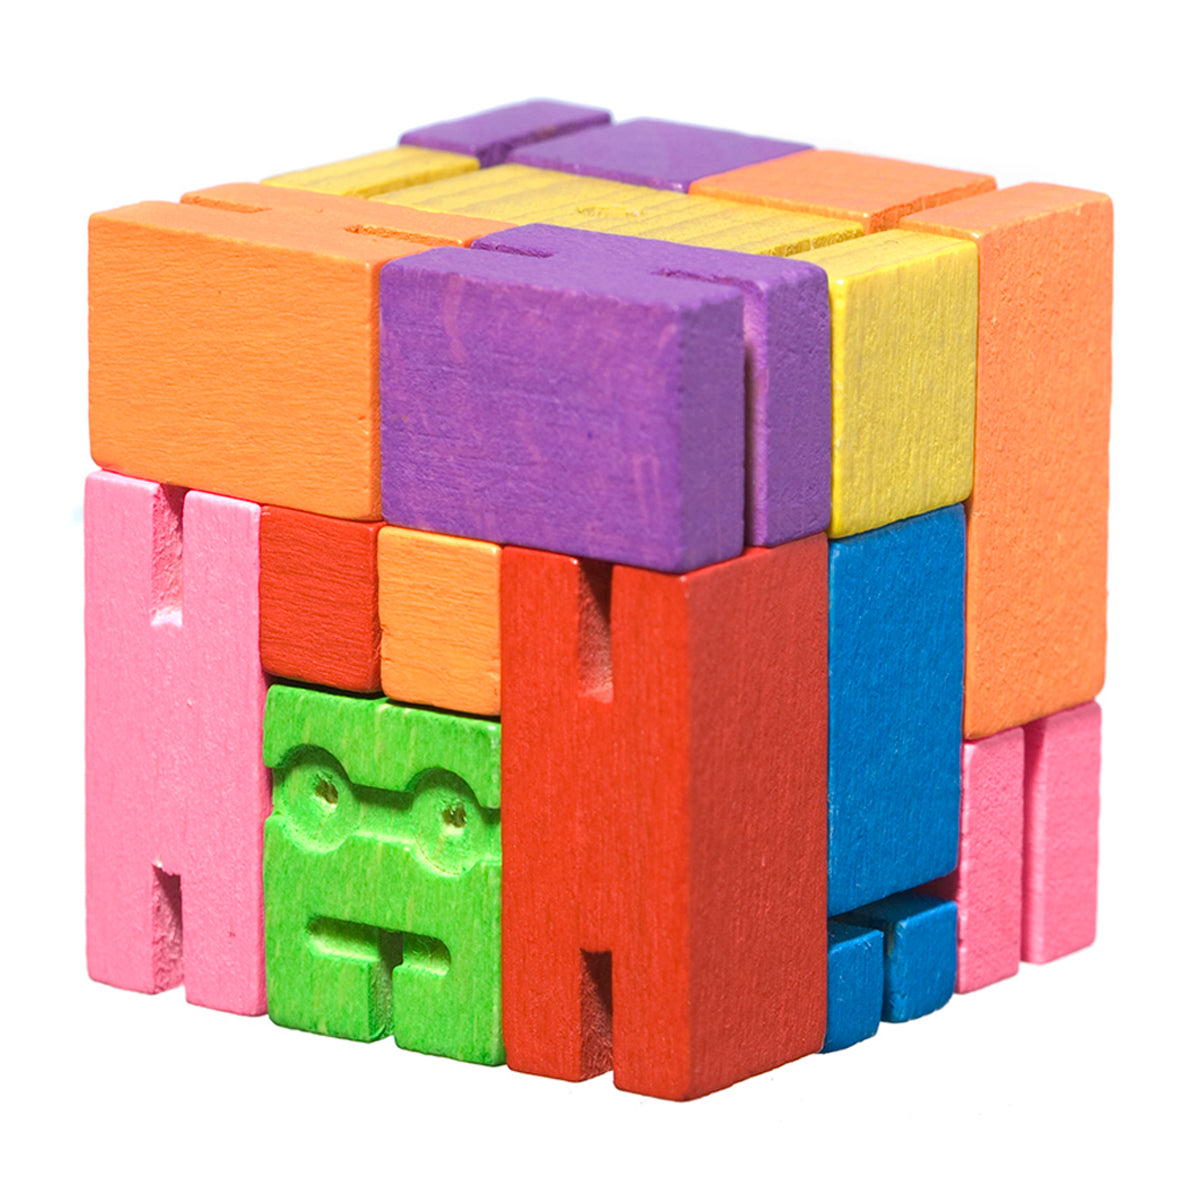 Cubebot Small Multi